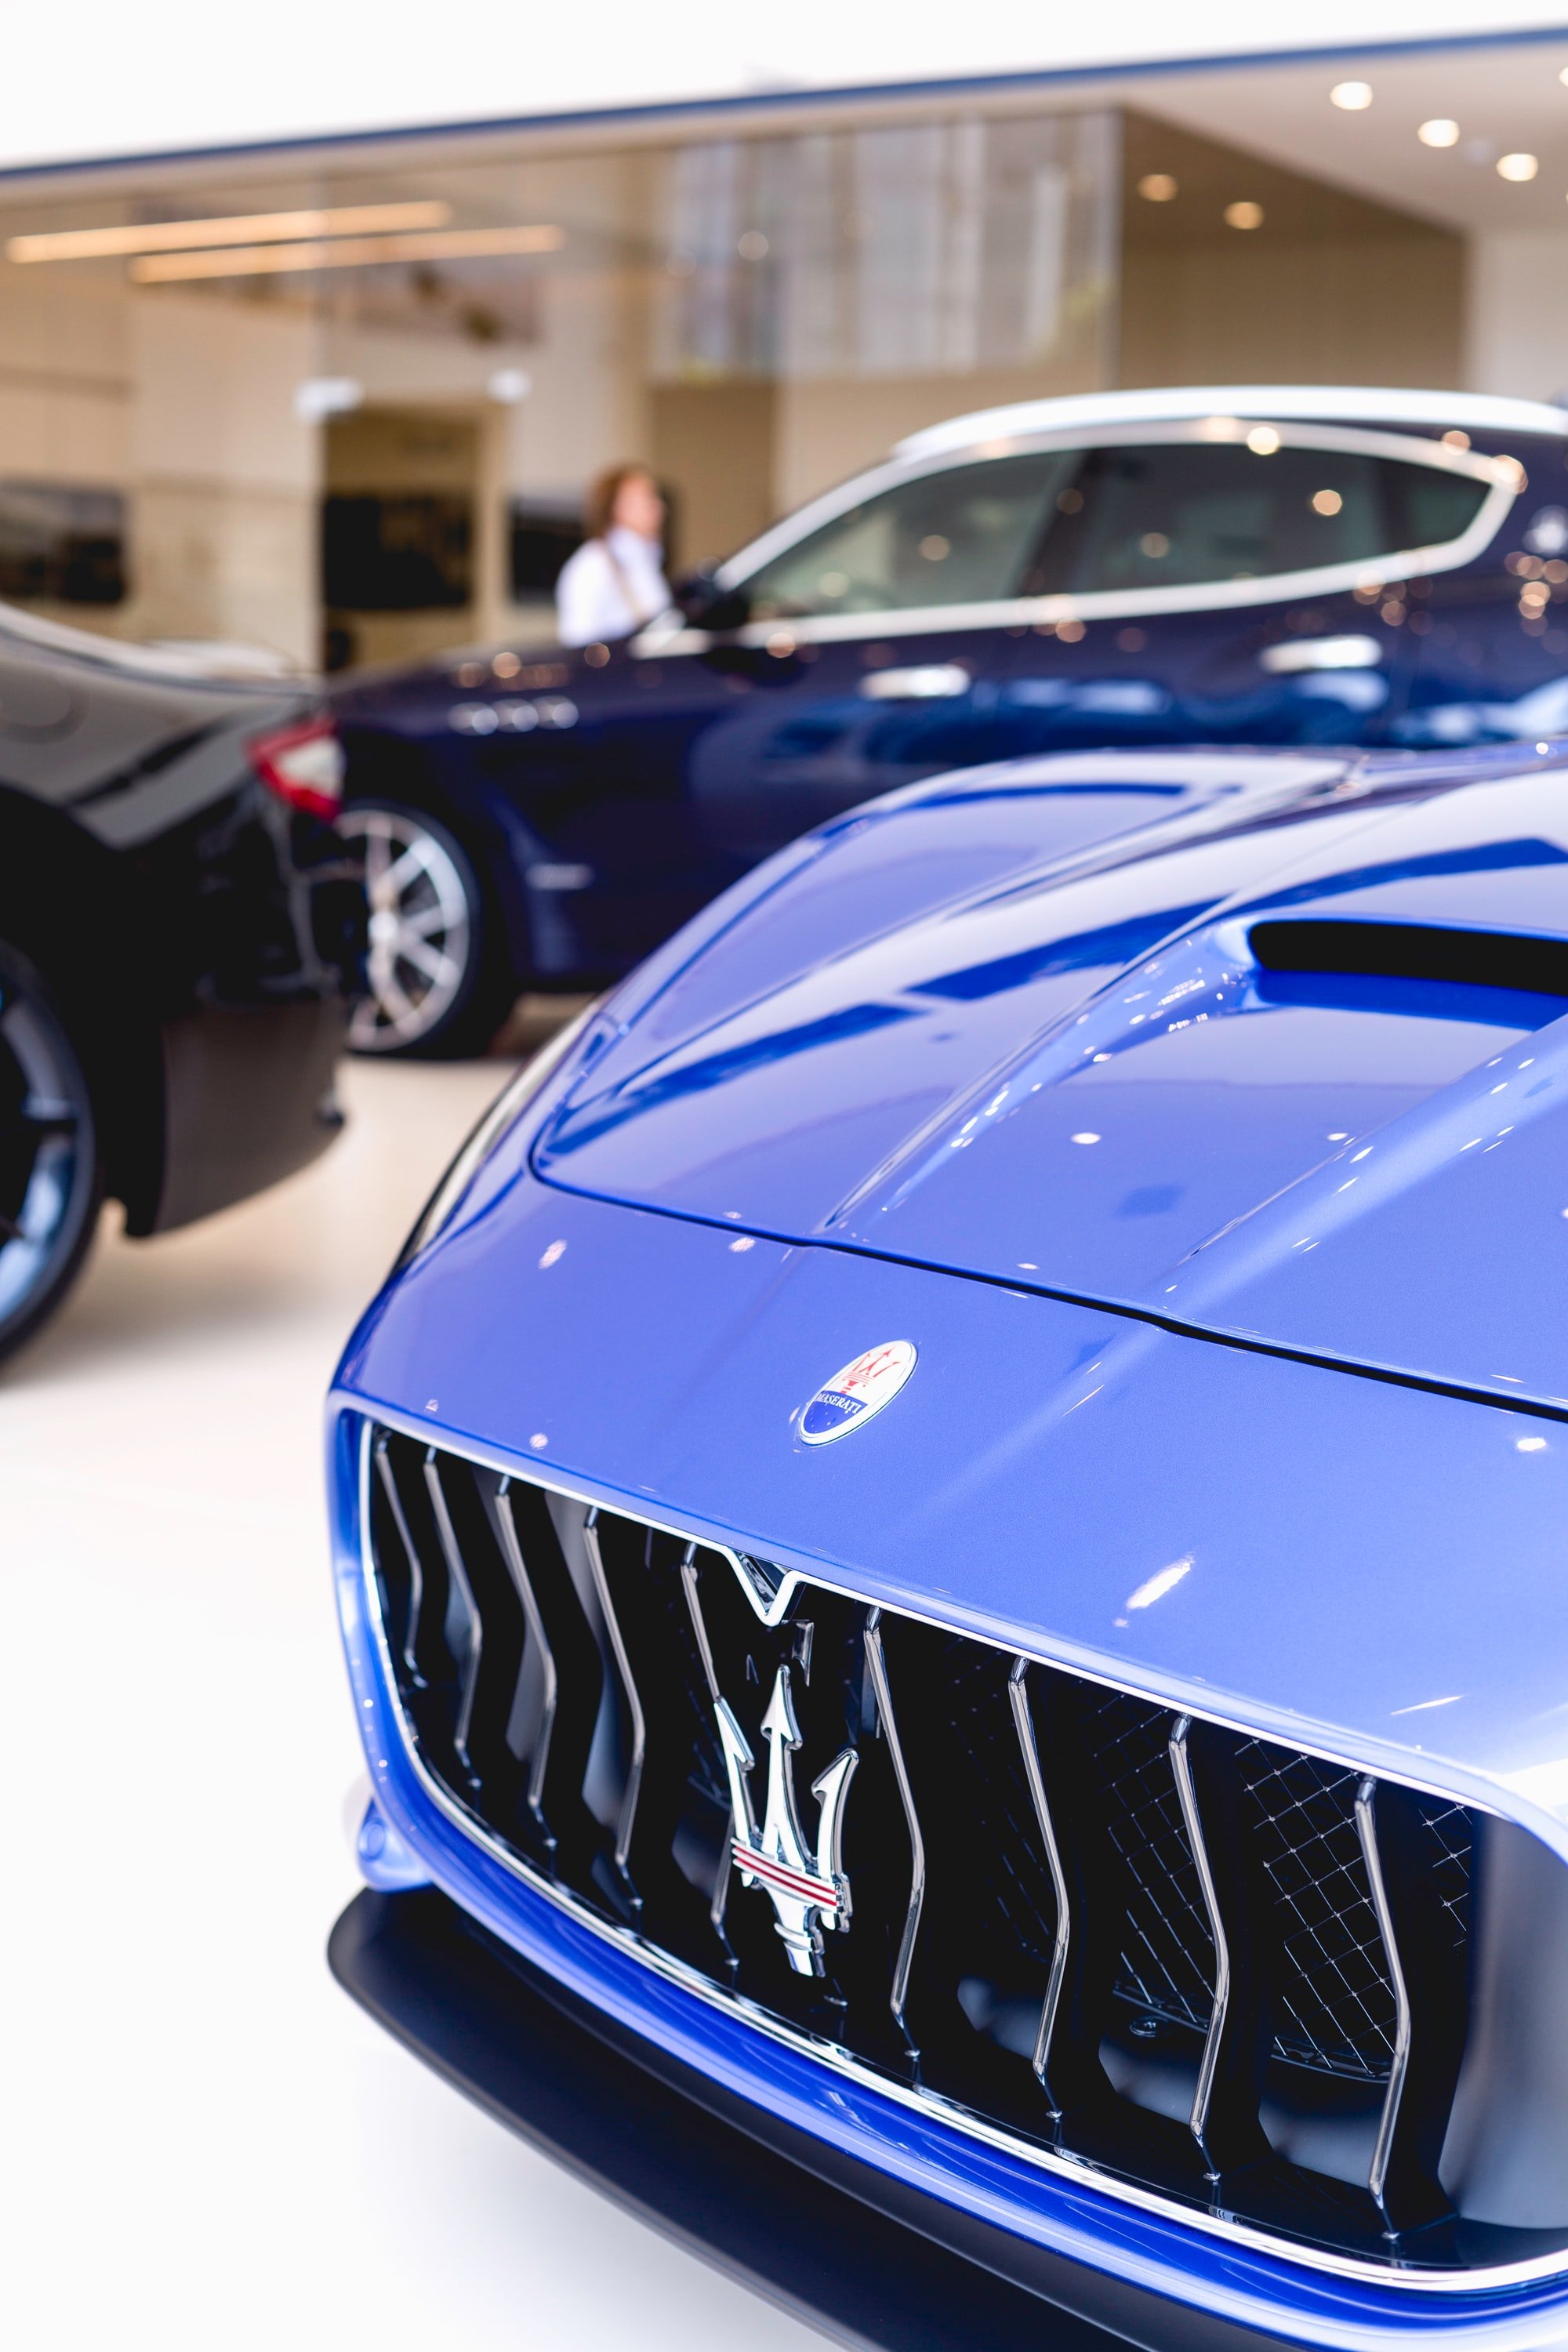 Alex got a phone call from the Maserati dealership. | Source: Unsplash